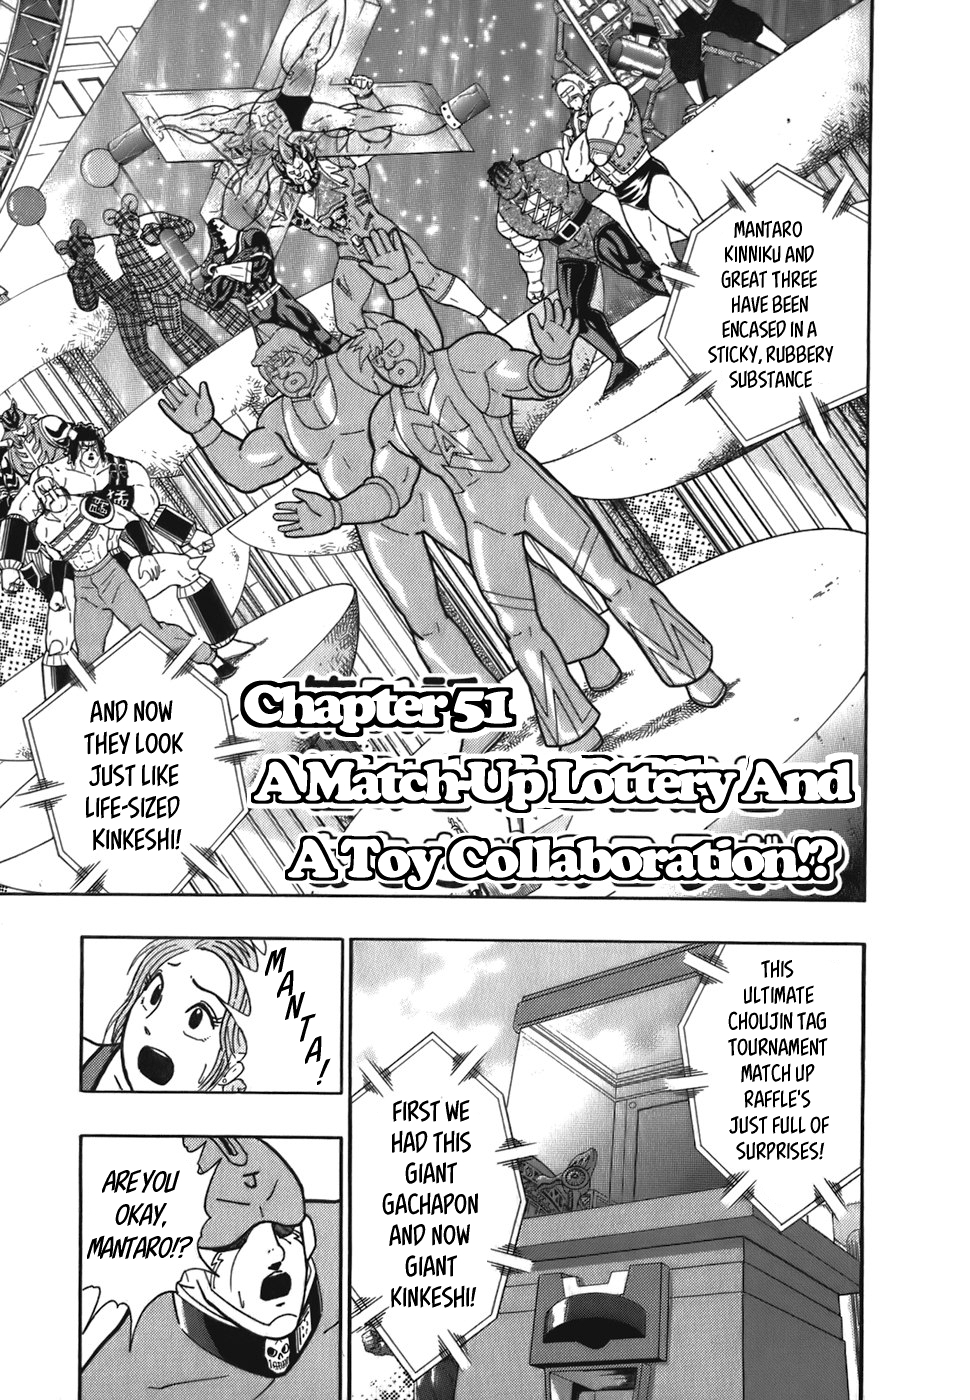 Kinnikuman II Sei: Kyuukyoku Choujin Tag Hen Vol. 5 Ch. 51 A Match Up Lottery And A Toy Collaboration!?